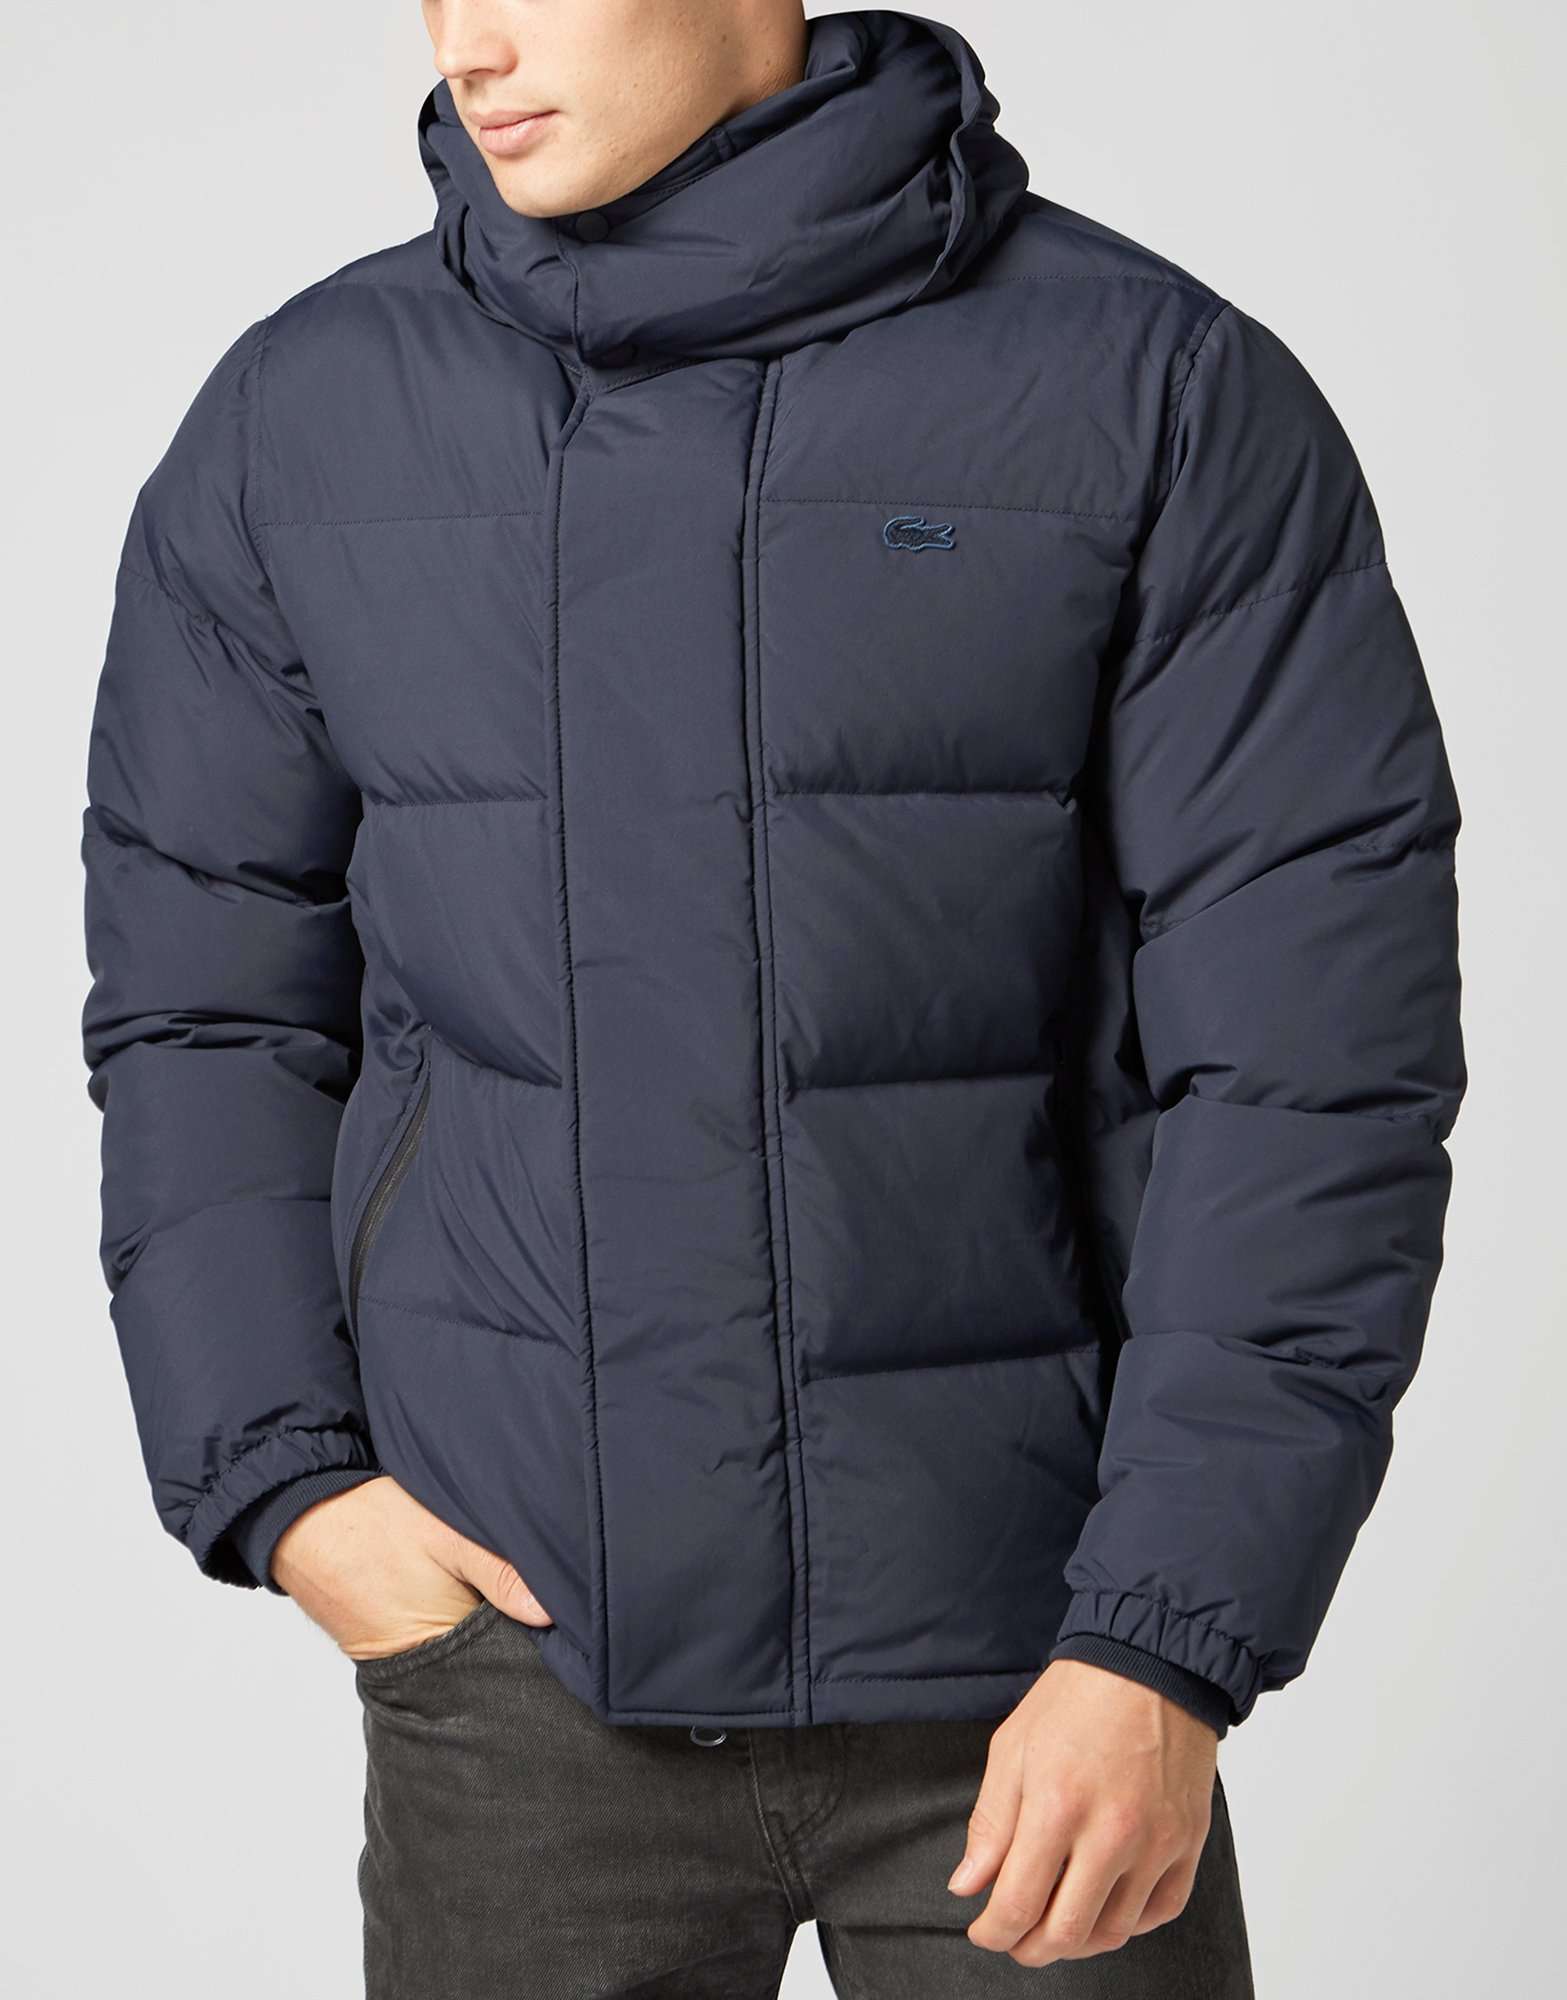 Lacoste Premium Bubble Jacket | scotts Menswear